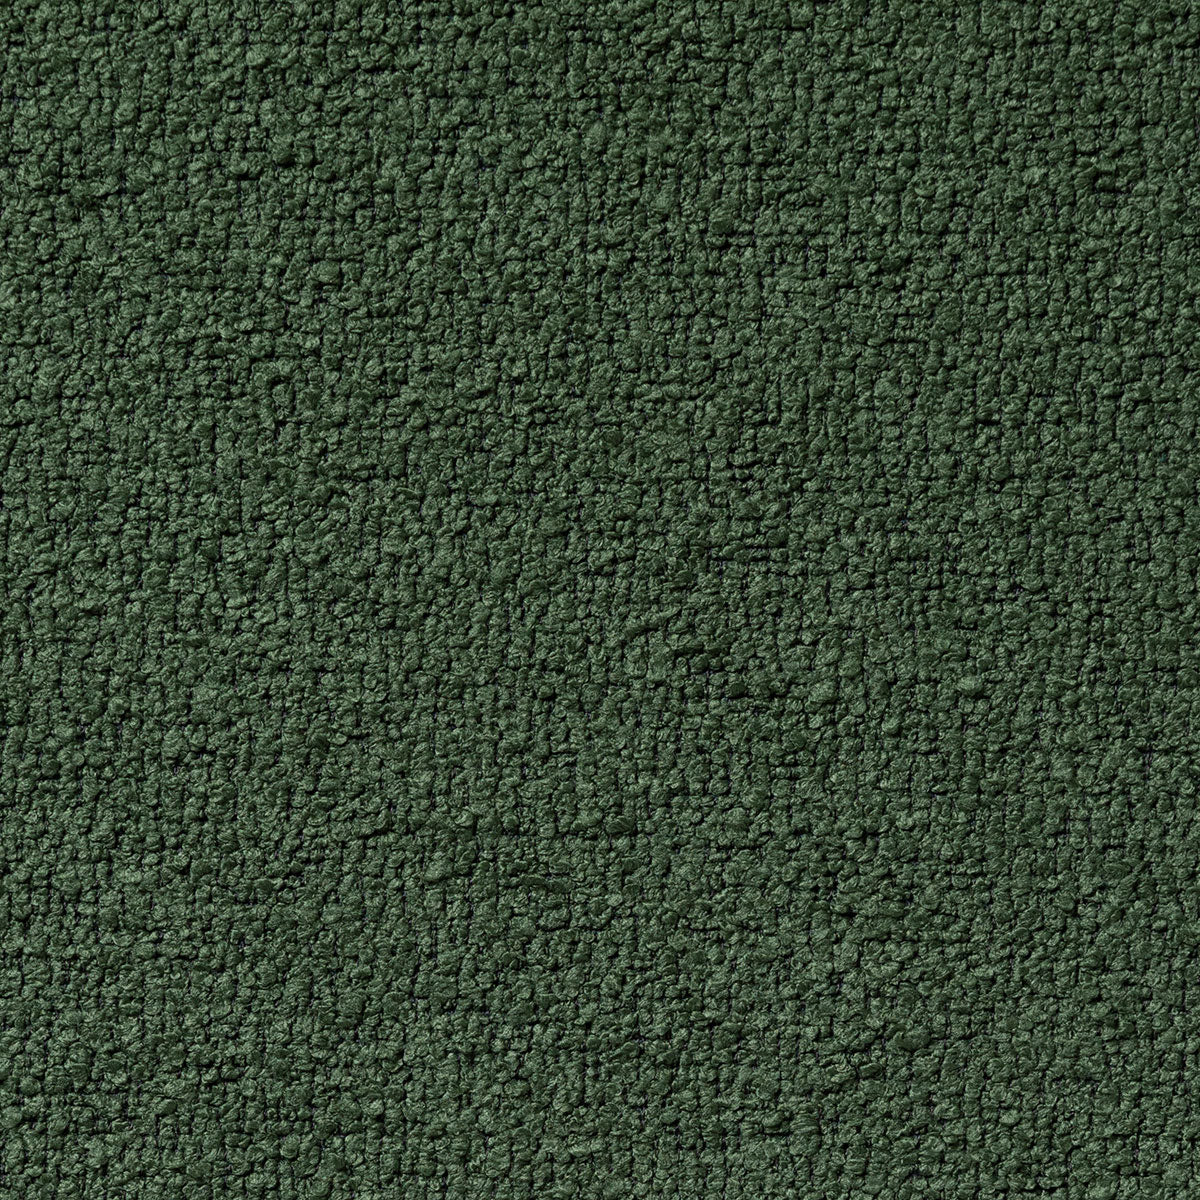 A dark sage green boucle textured fabric